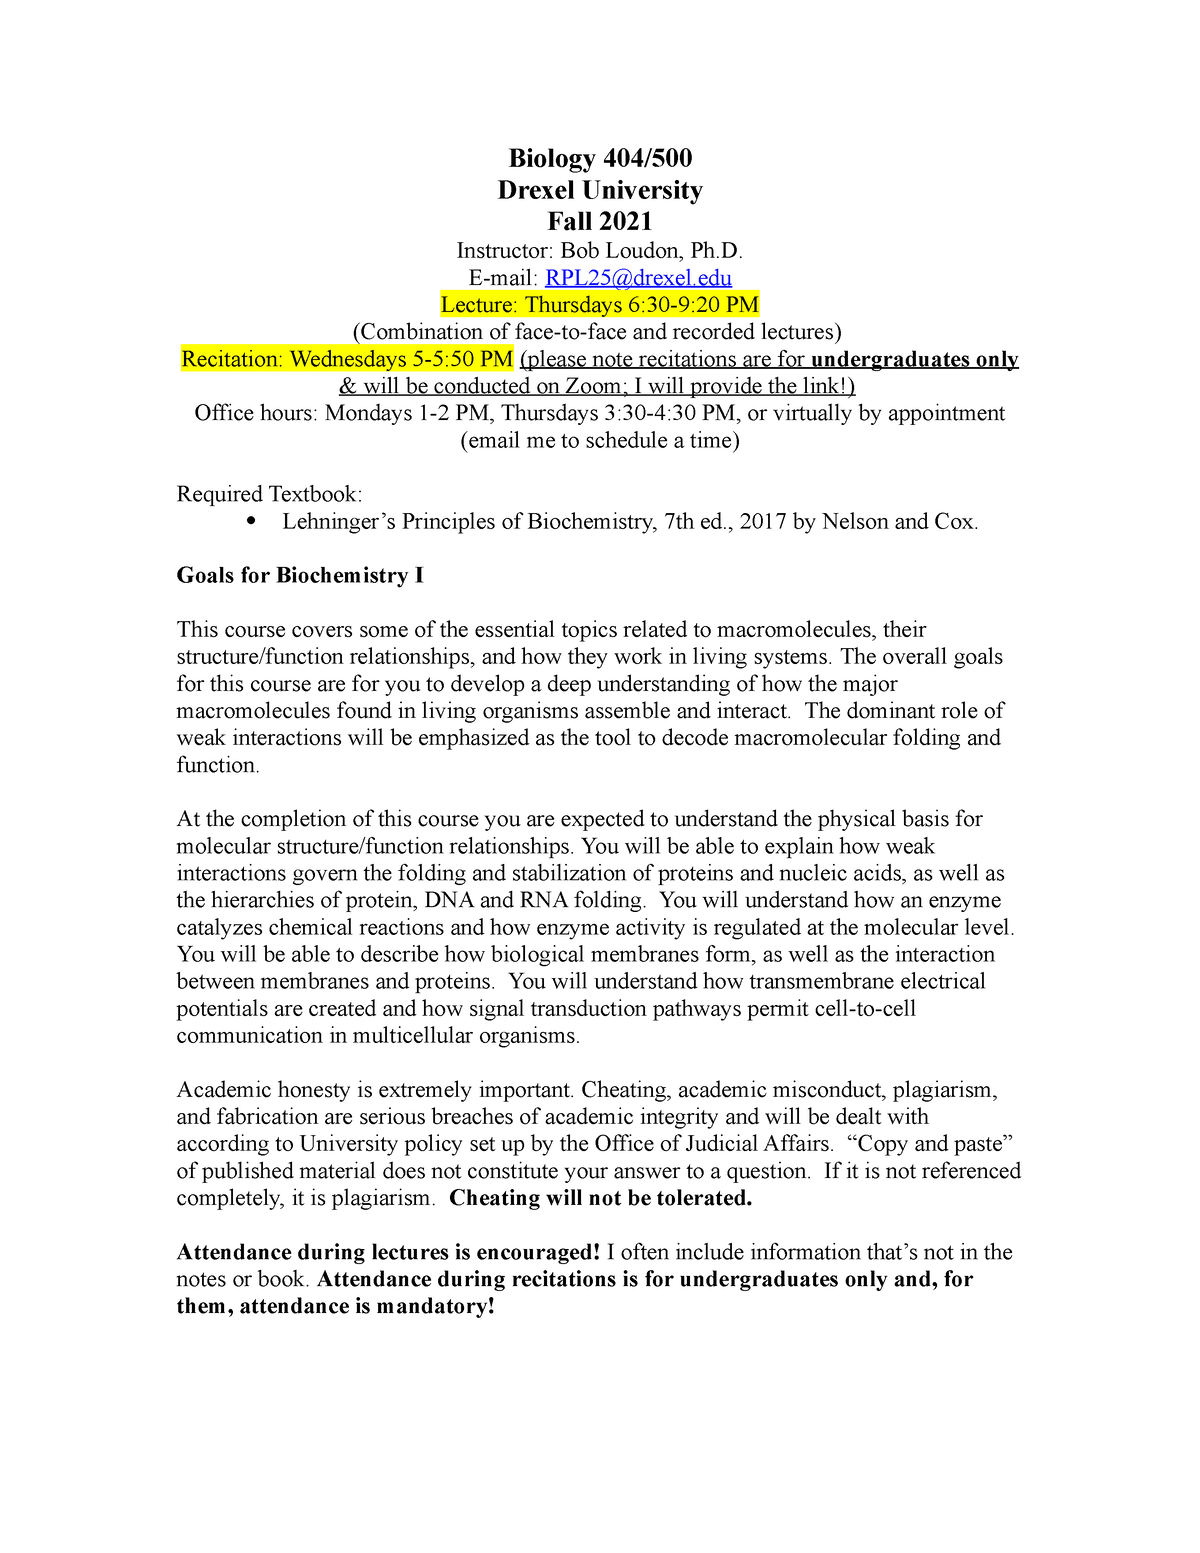 Bio 404 500 Fall 2021 Syllabus - Biology 404/ Drexel University Fall ...